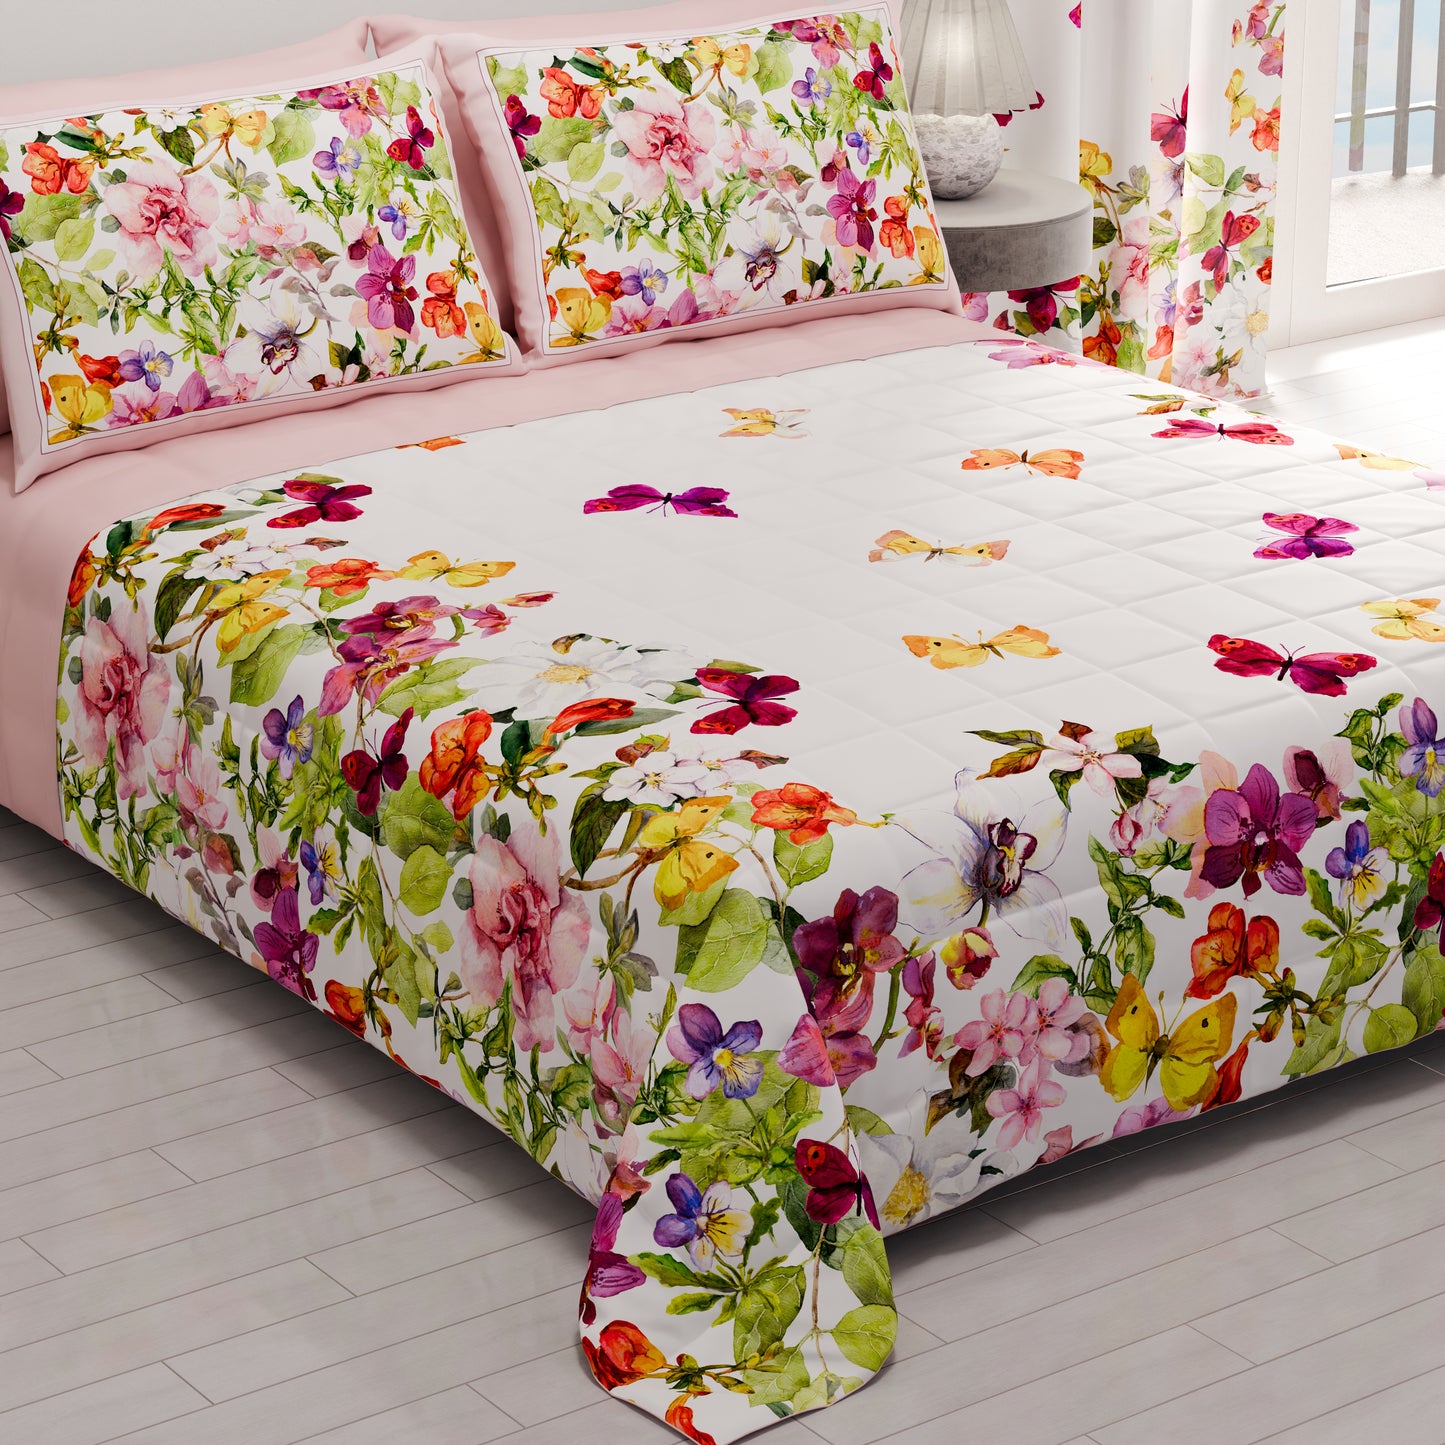 Spring Autumn Bedspread Quilt in Butterflies Digital Print